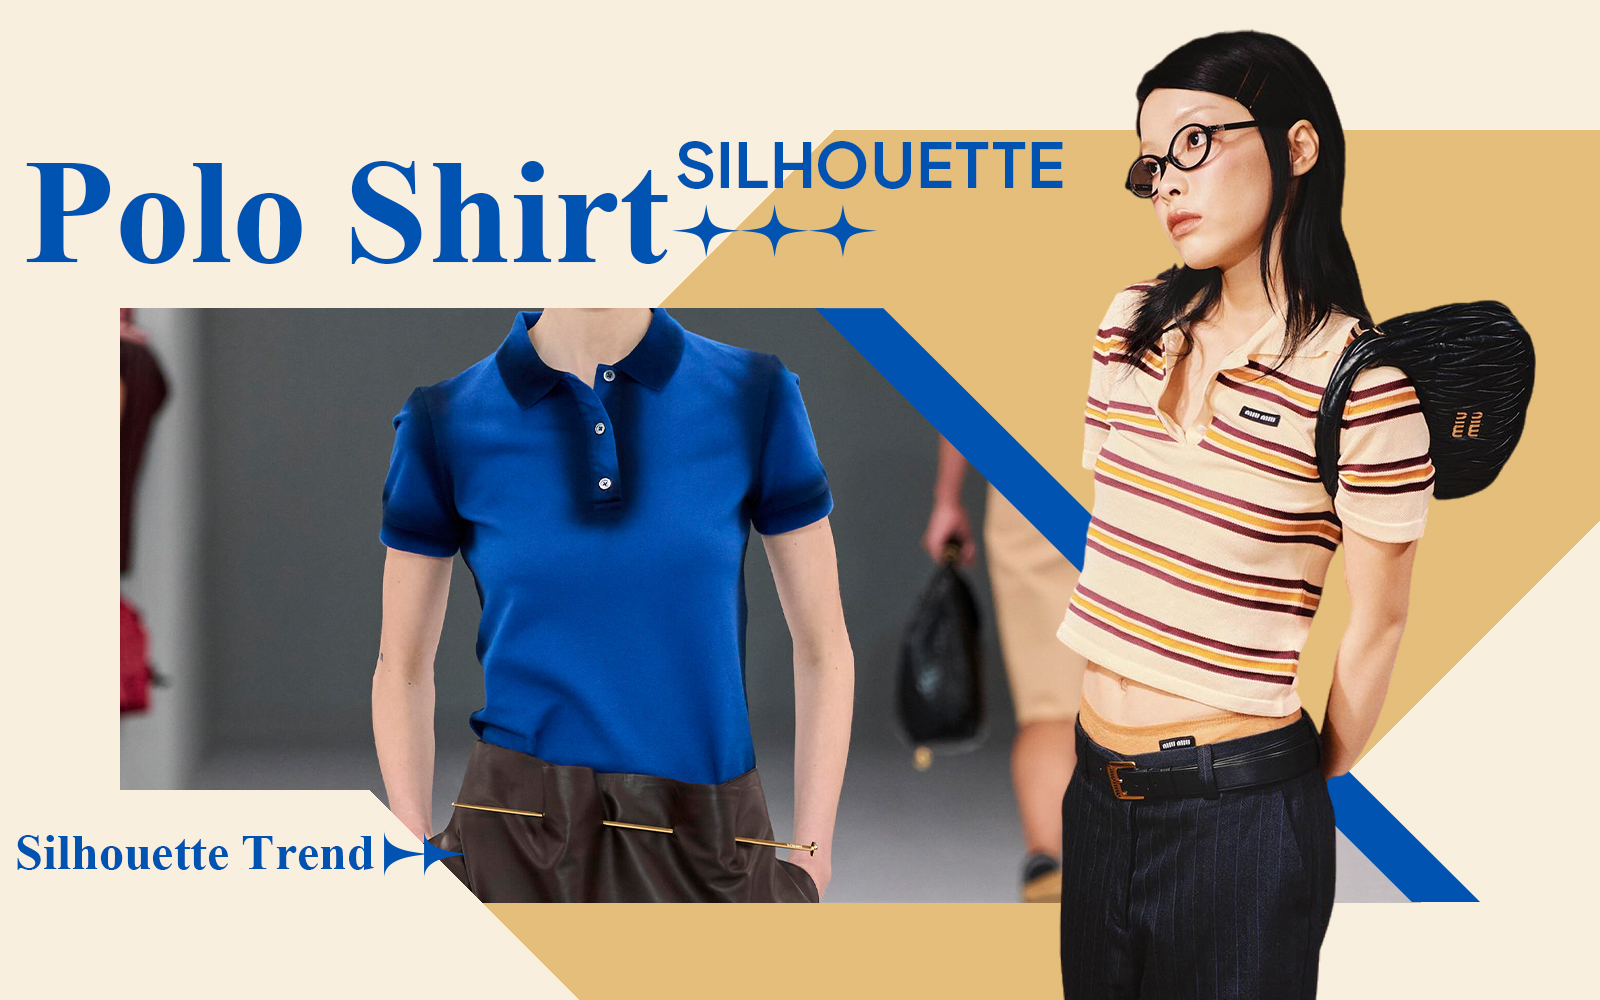 Miu Miu Style -- The Silhouette Trend for Women's Polo Shirt